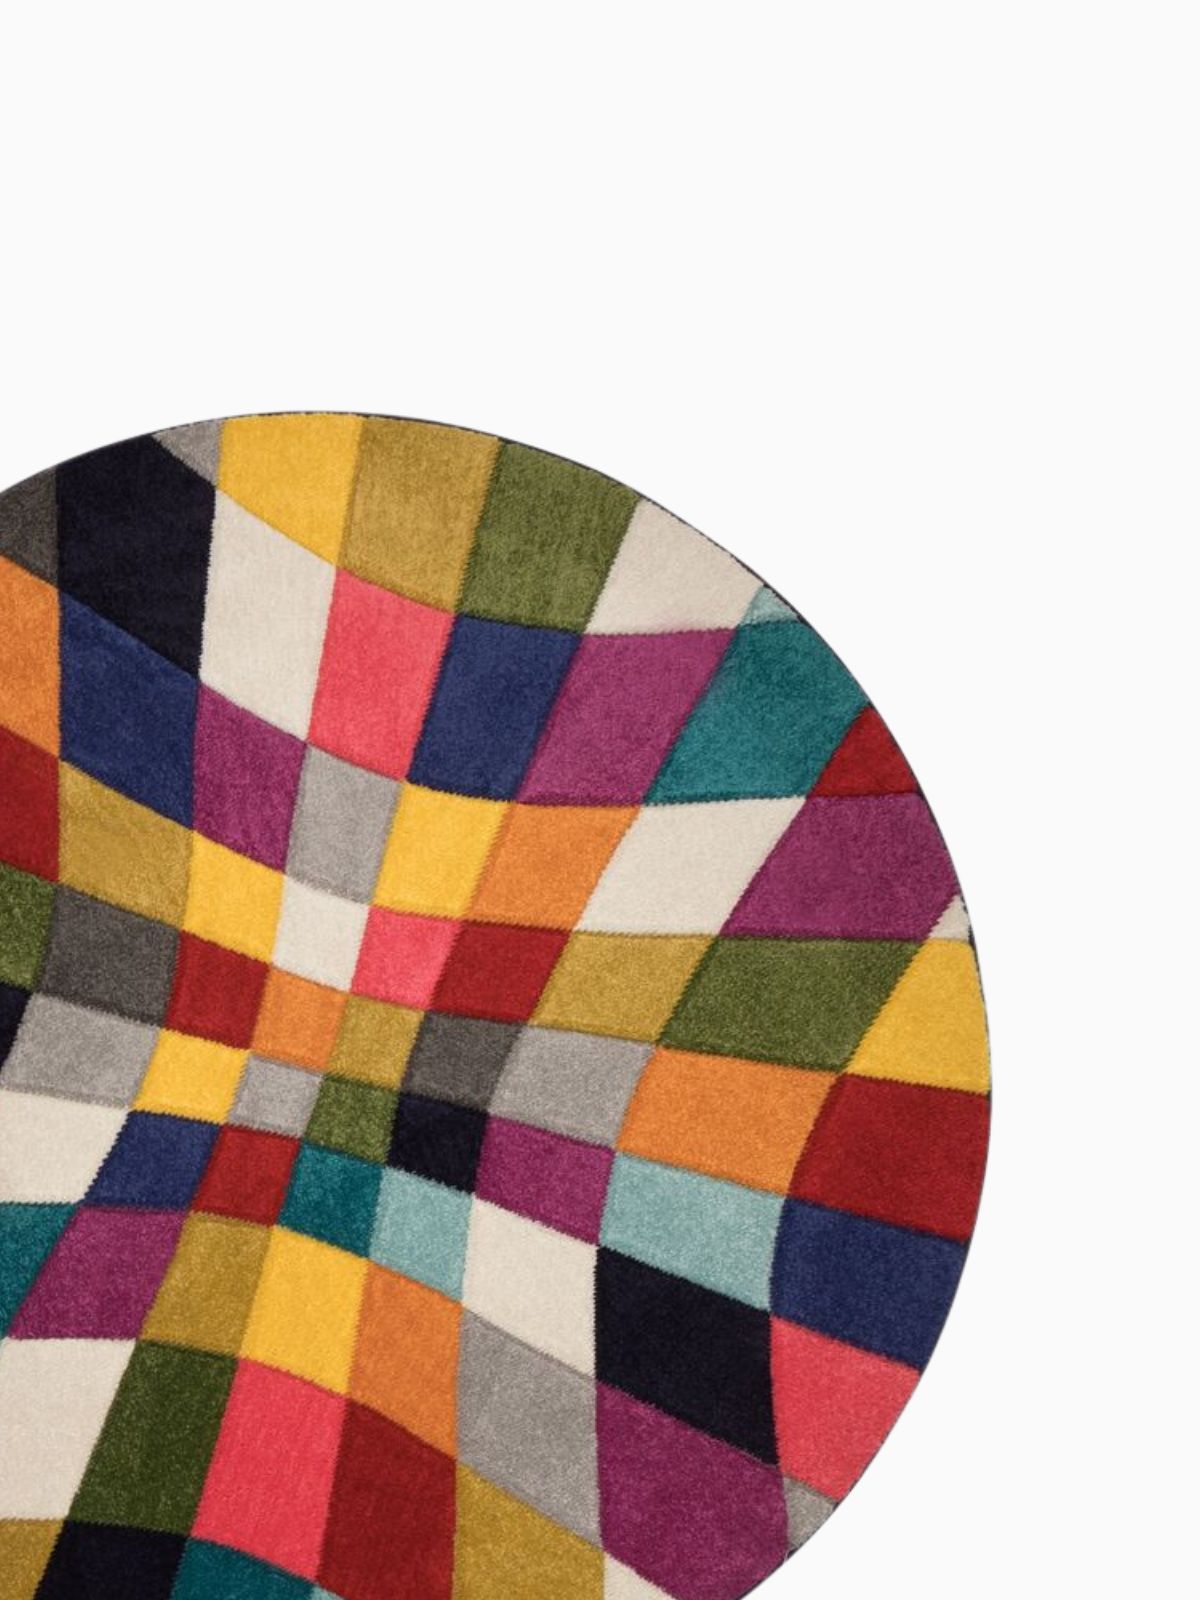 Tappeto rotondo moderno Rhumba in polipropilene, multicolore 160x160 cm.-3